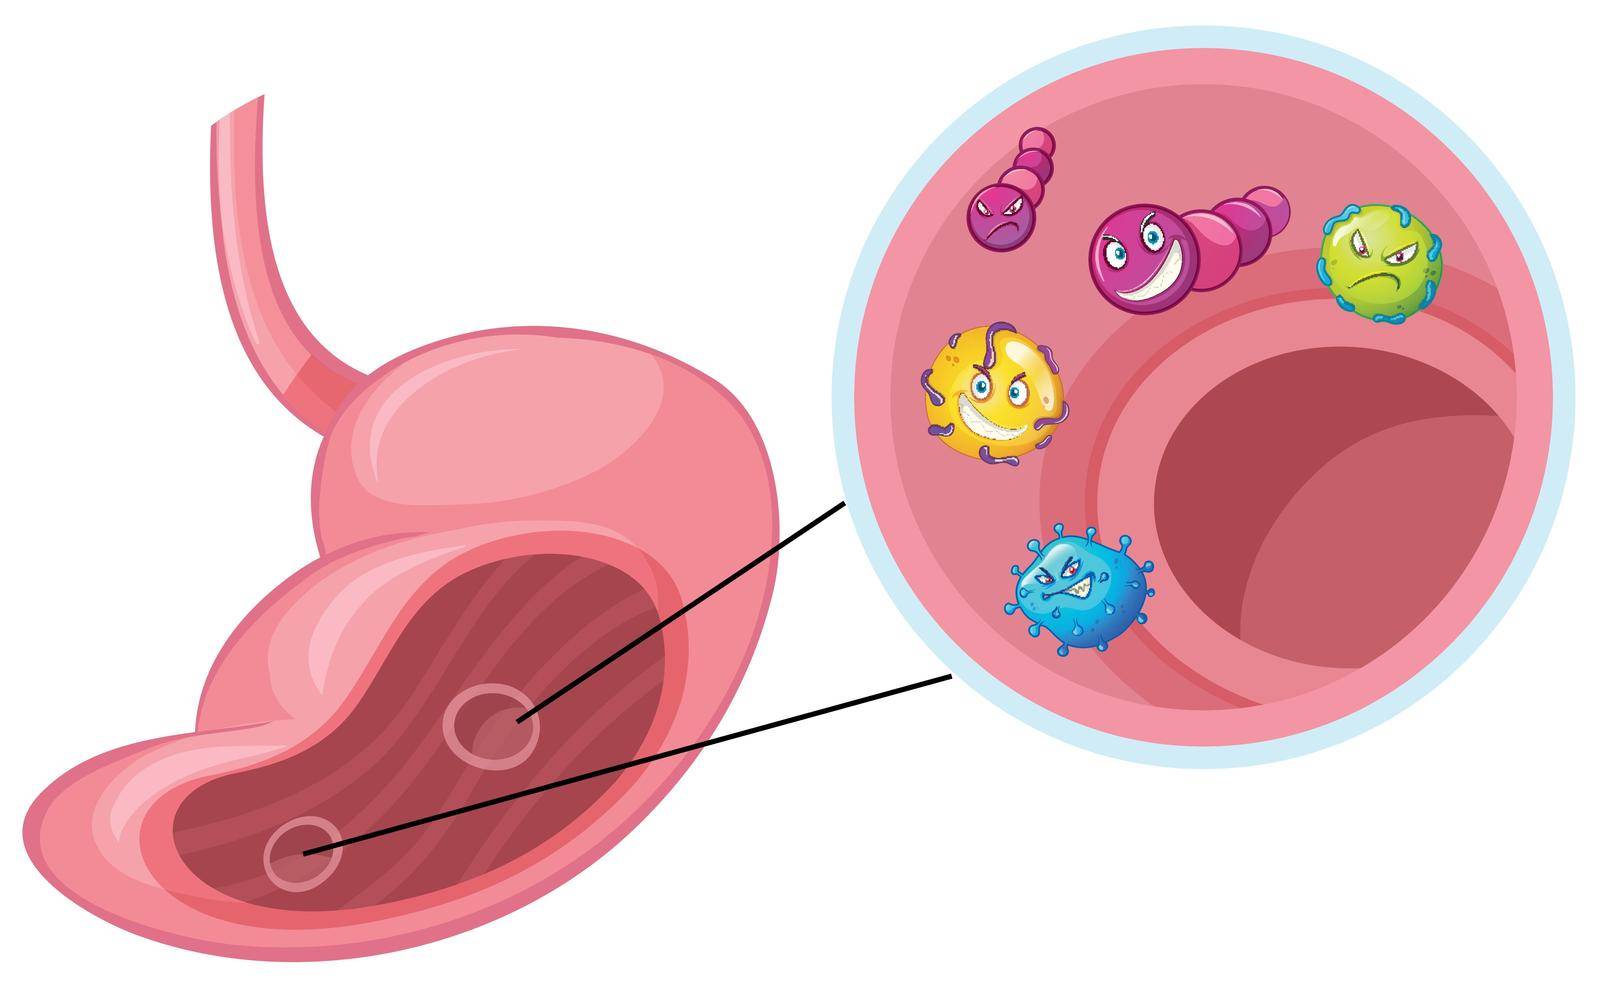 Many virus in human stomach illustration